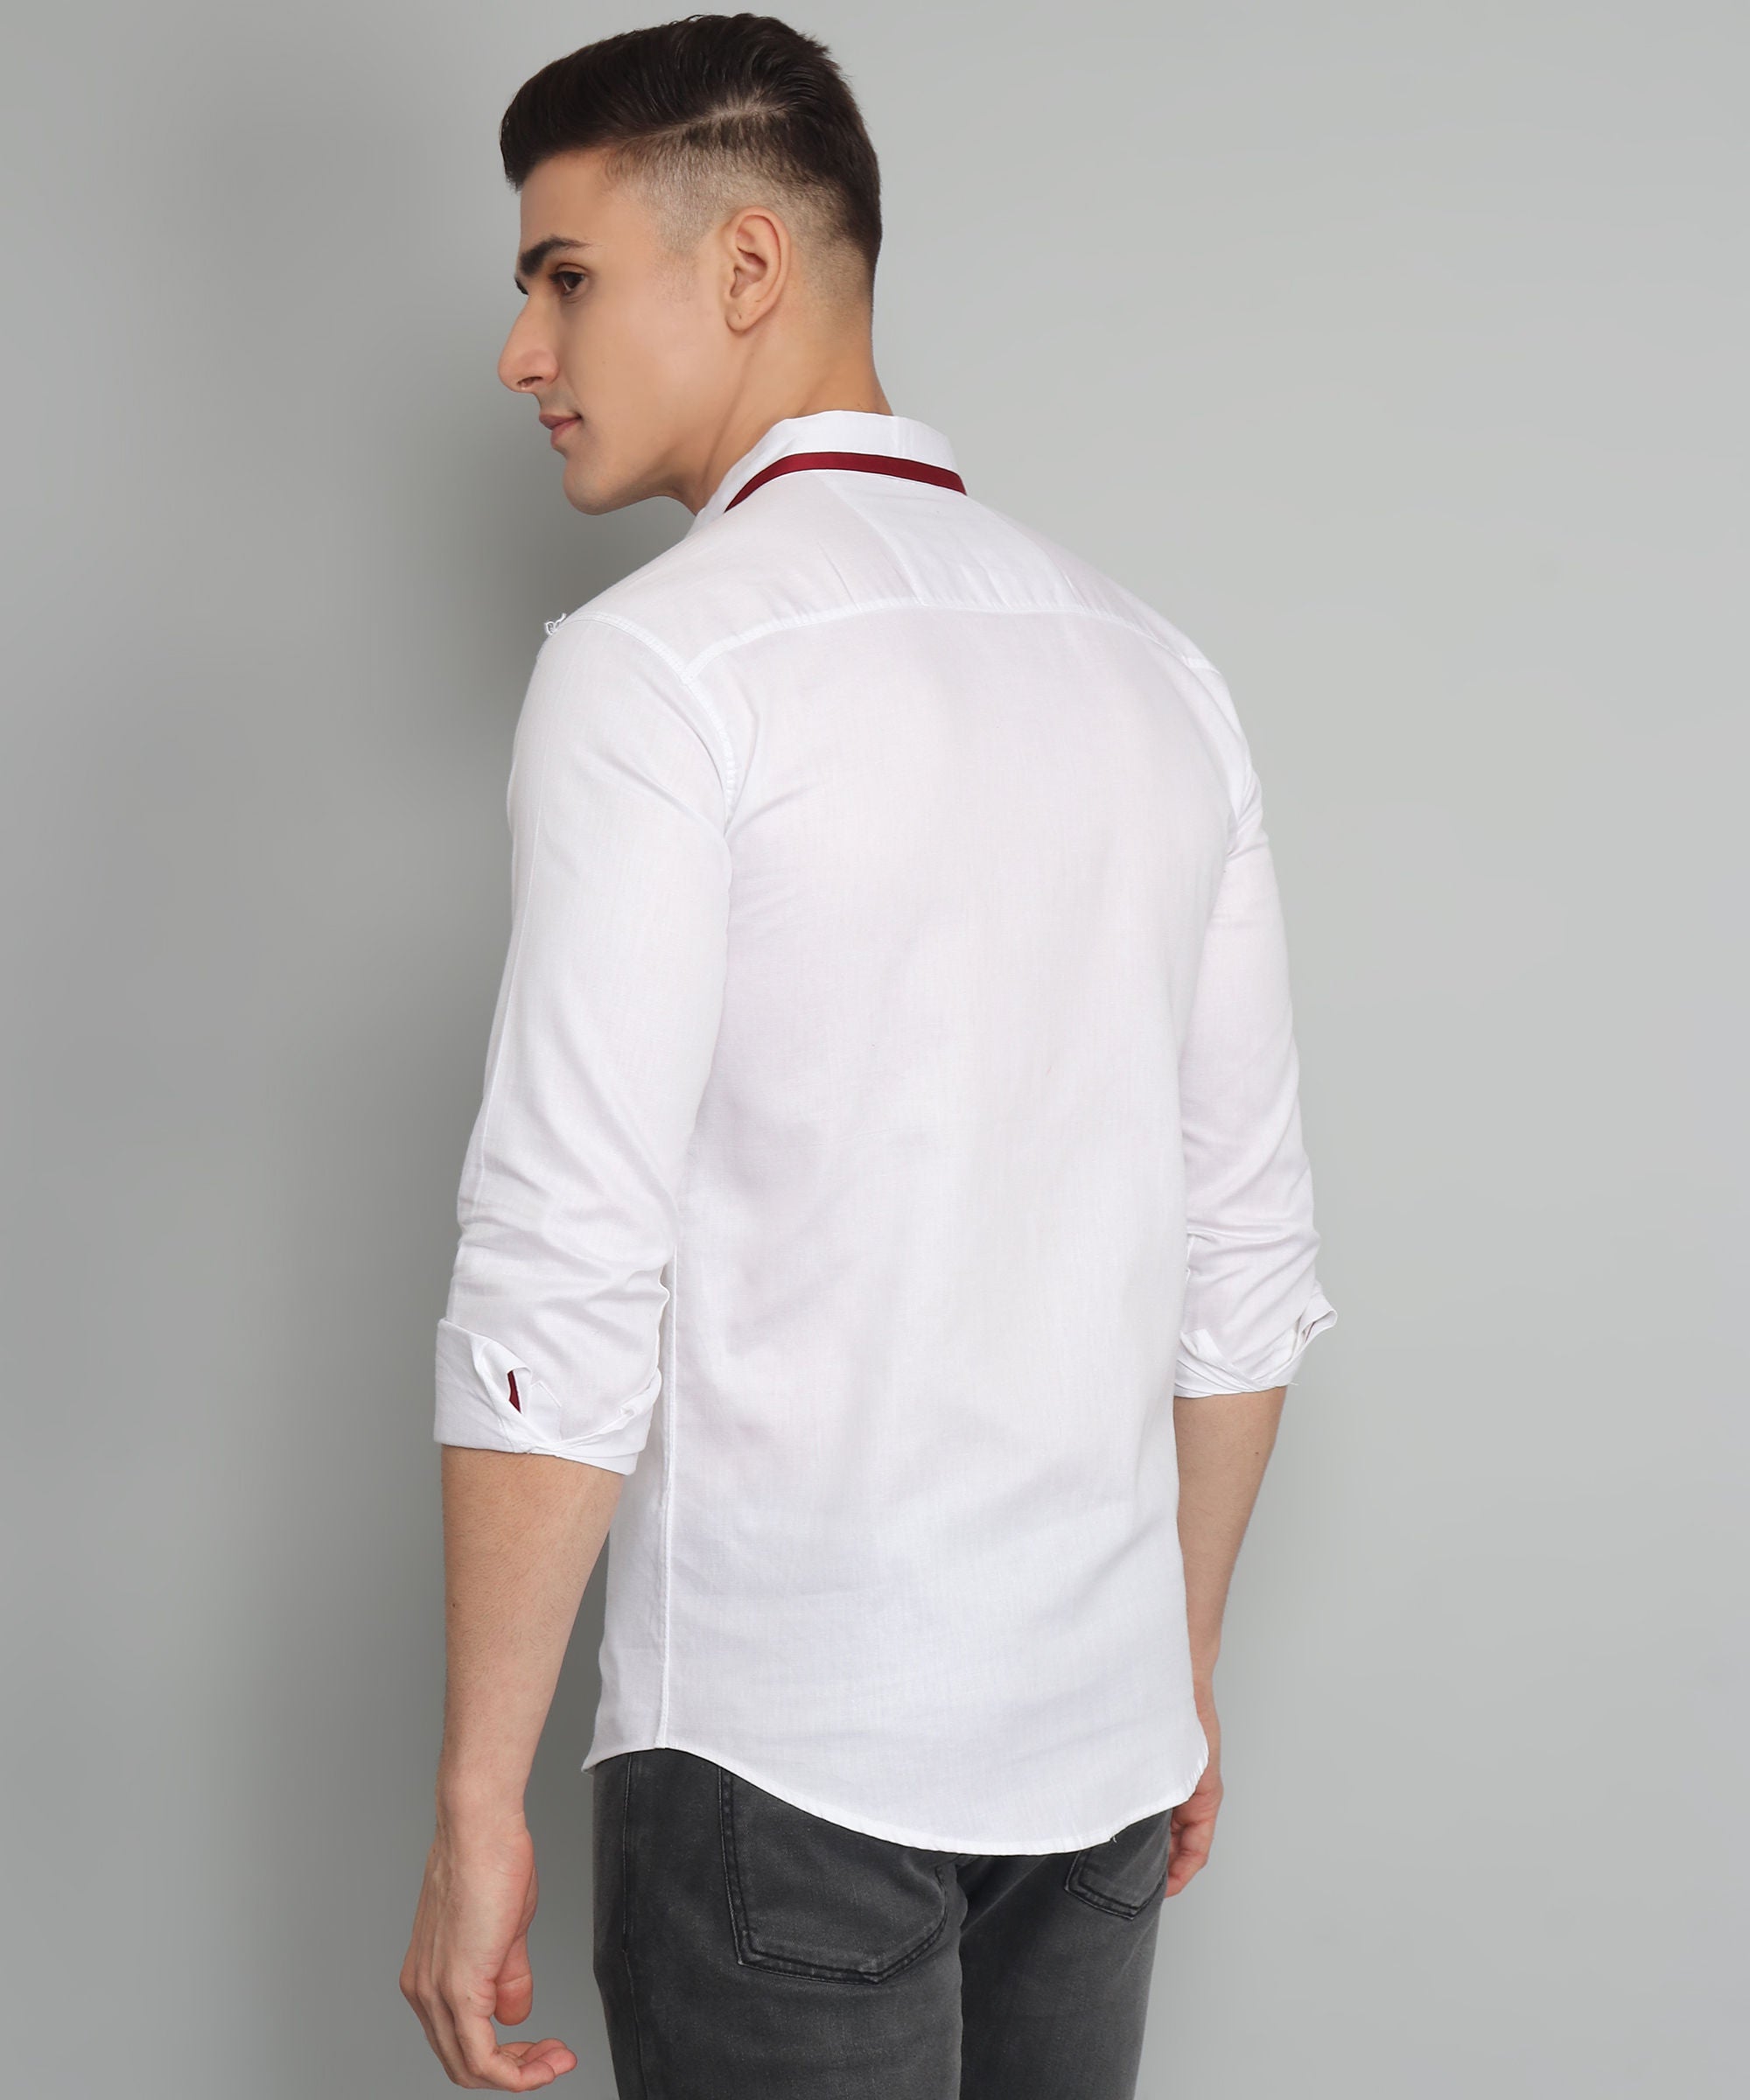 Rough Premium White Solid Casual Cotton Dress Shirt For Men